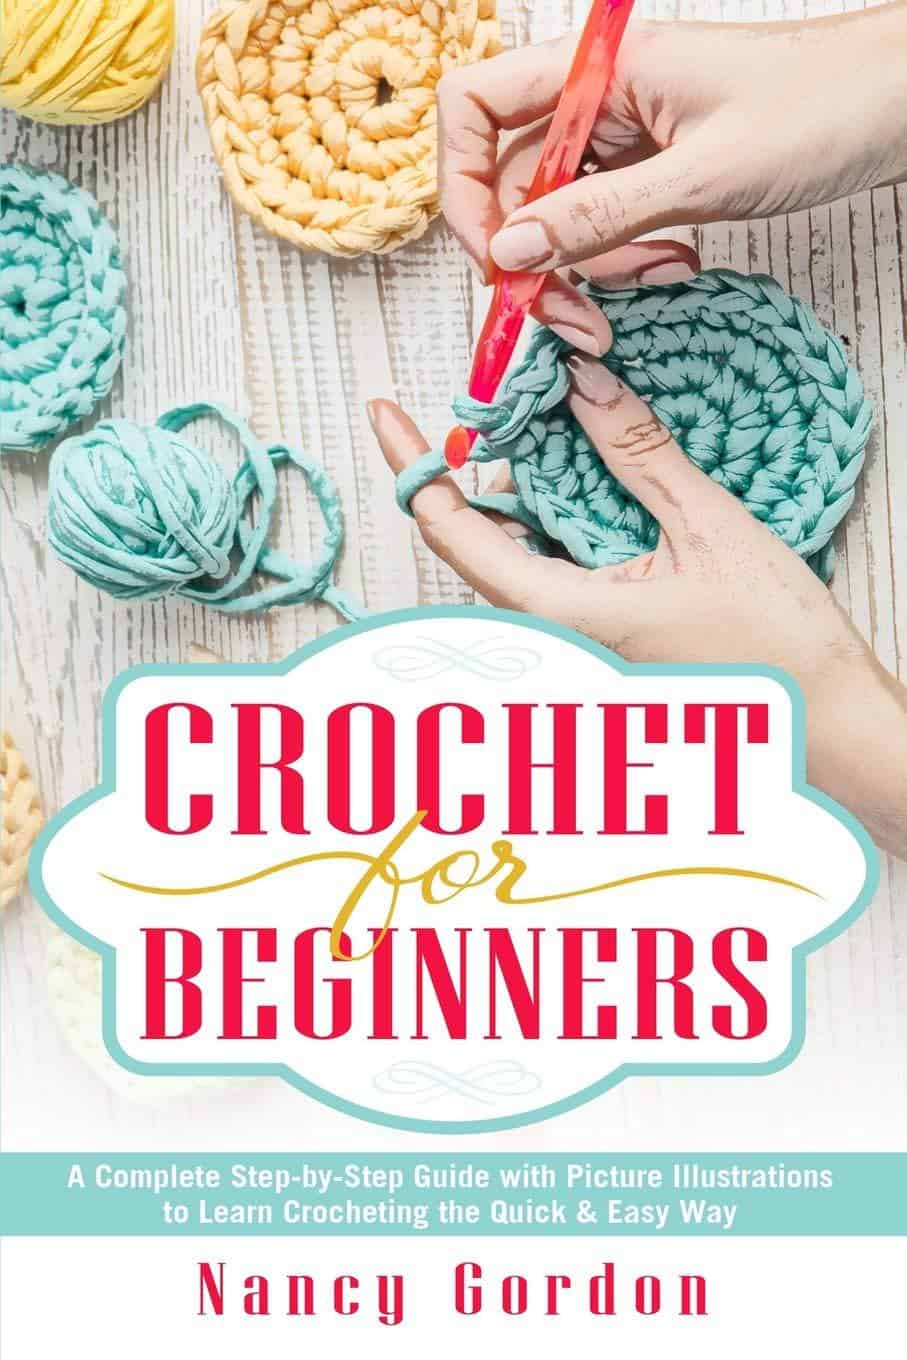 4 BEST Crochet Stitch Books - Crochet With Cookie